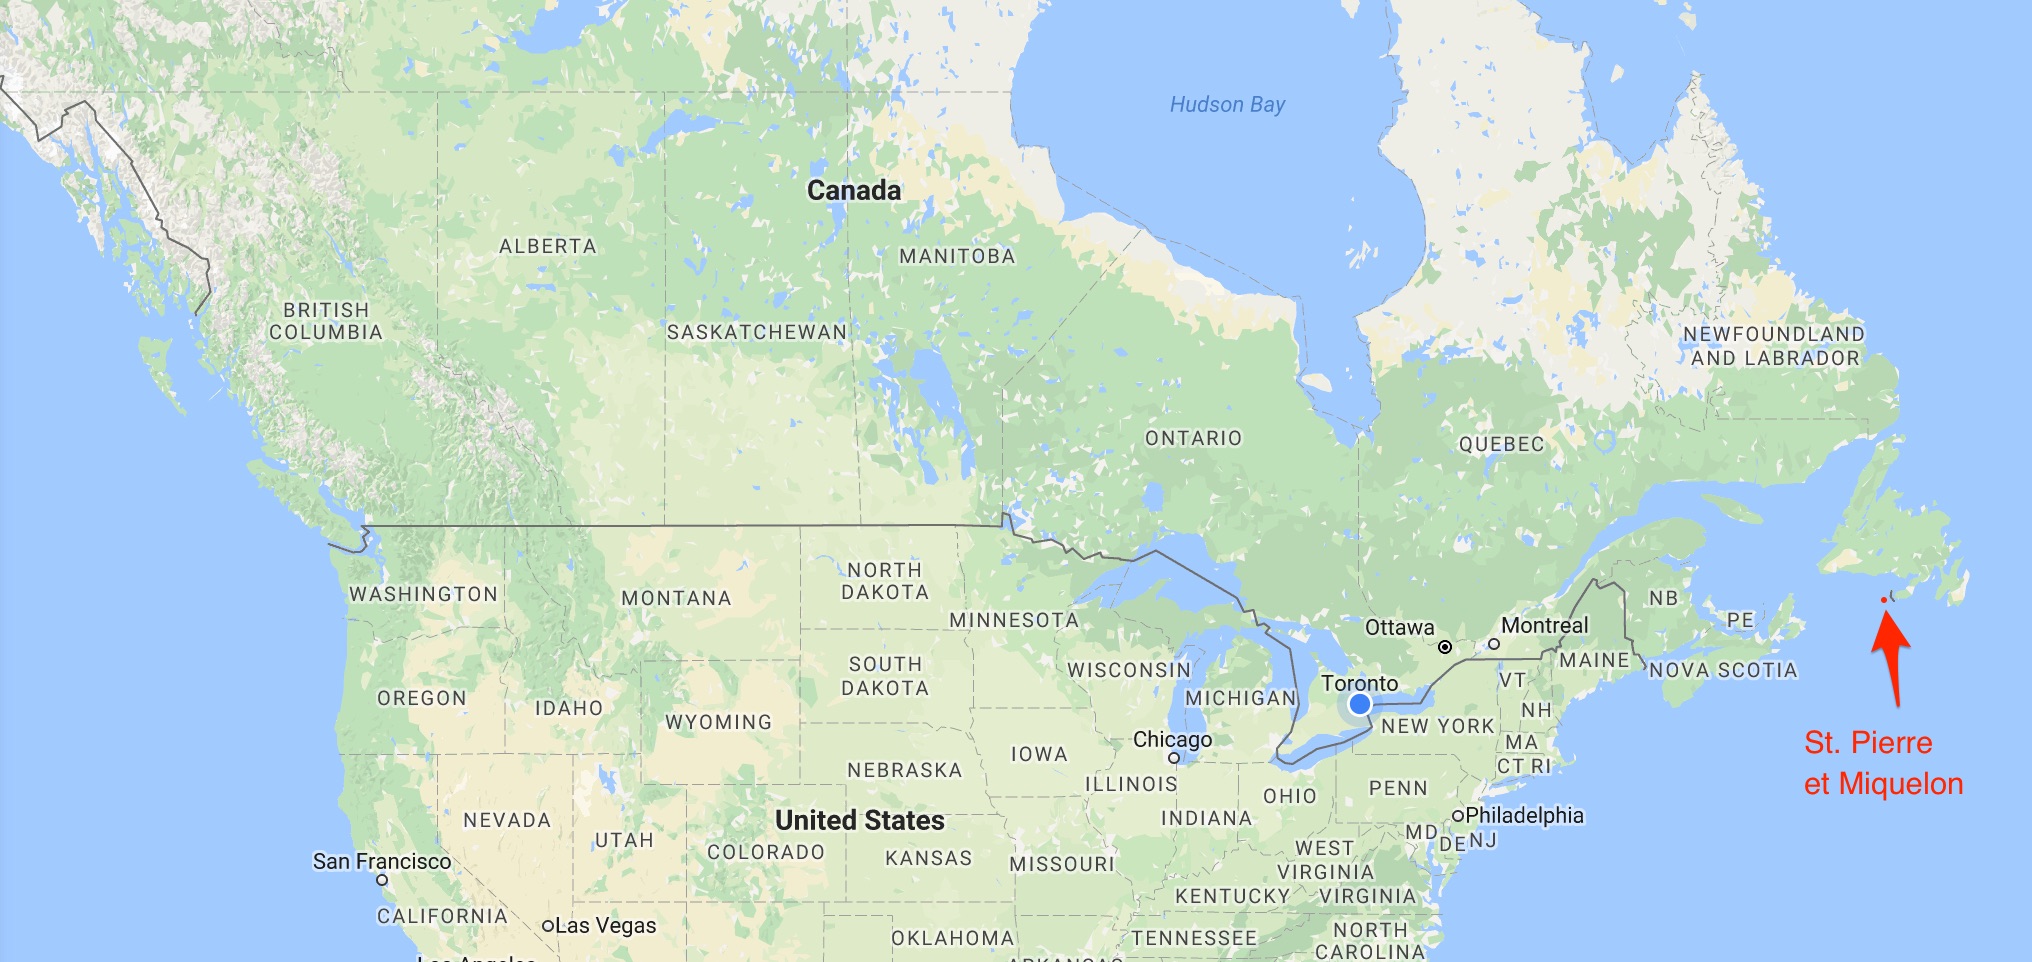 Hudson river map. Саскачеван на карте Северной Америки. Река Саскачеван на карте Северной Америки. Виннипег Канада на карте. Ниагарский водопад река на карте Северной Америки.